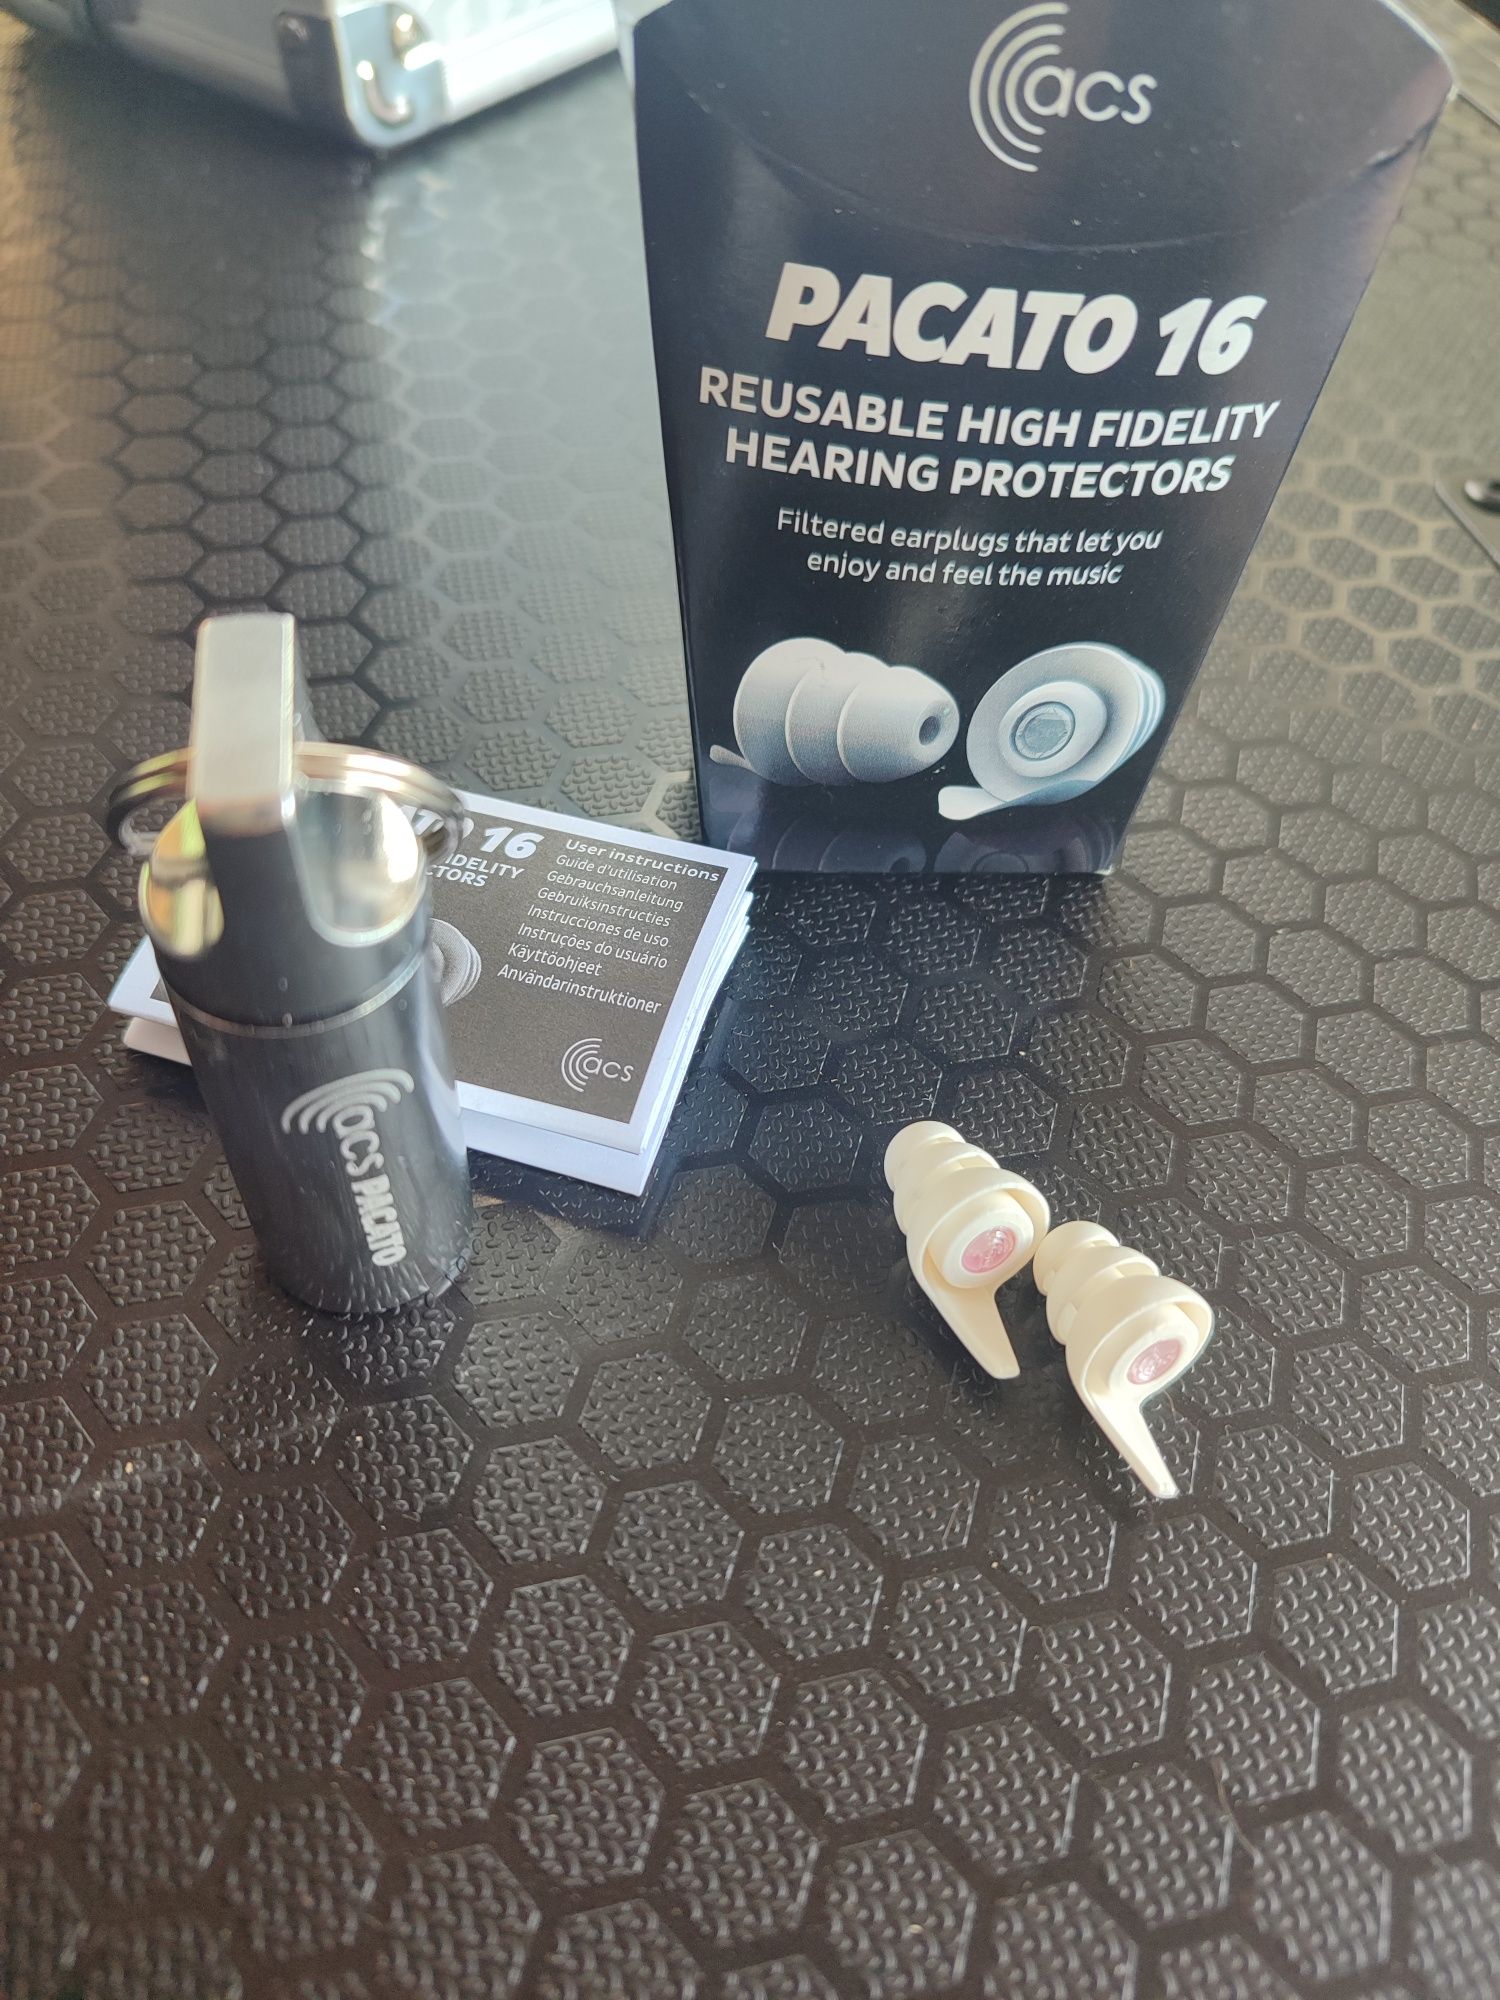 Protetor auditivo ear plugs Pacato 16